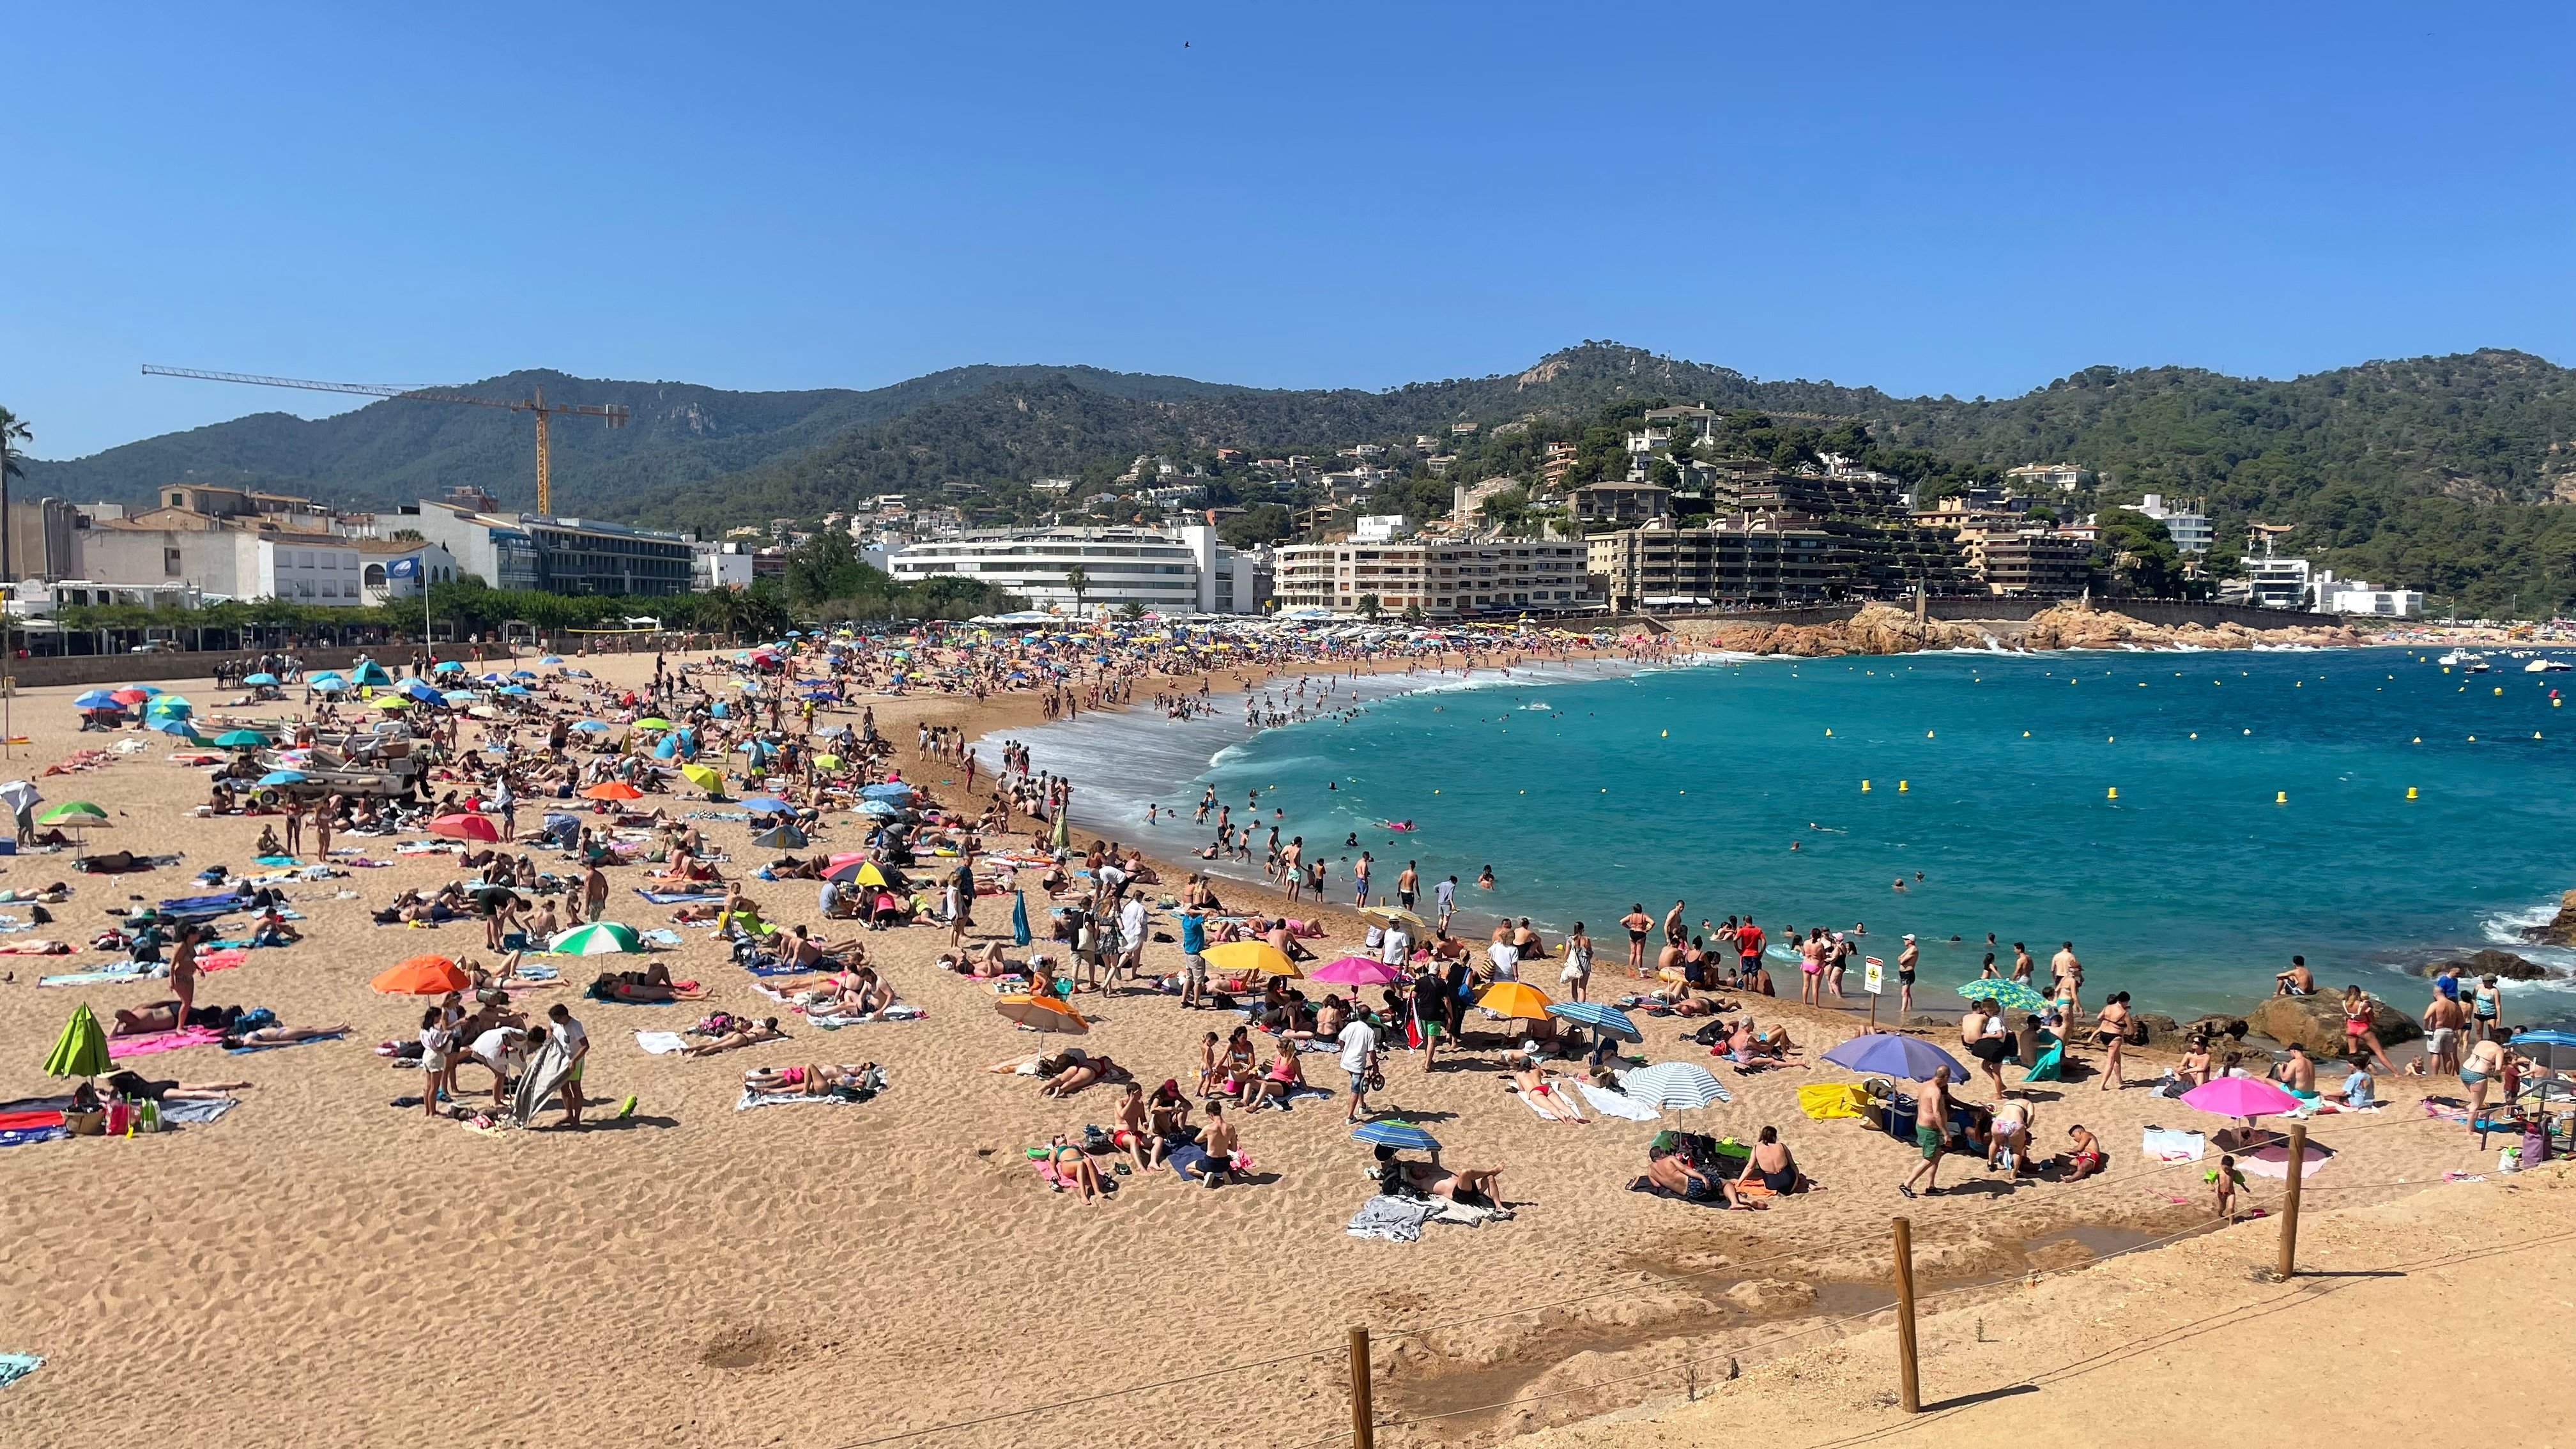 Day trip to Costa Brava: explore Catalonia’s gorgeous coastline